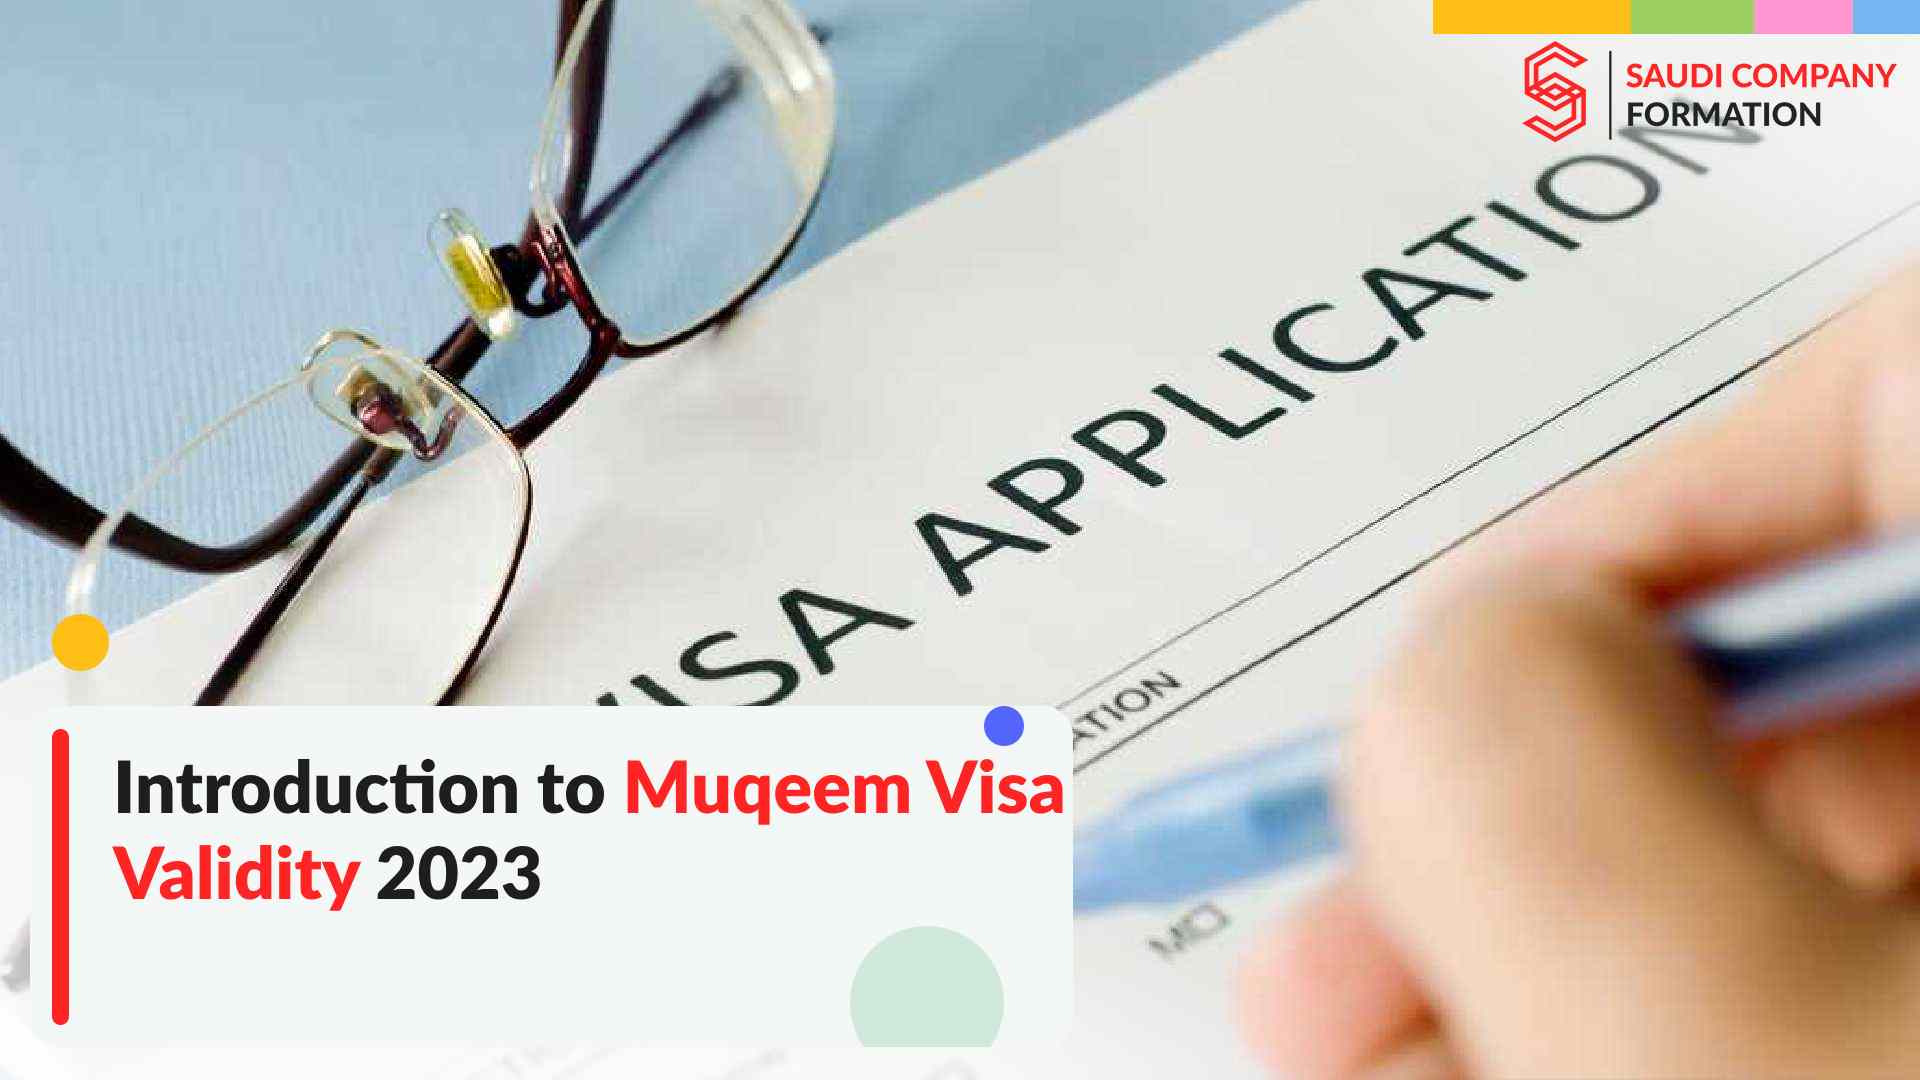 Introduction to Muqeem Visa Validity 2023